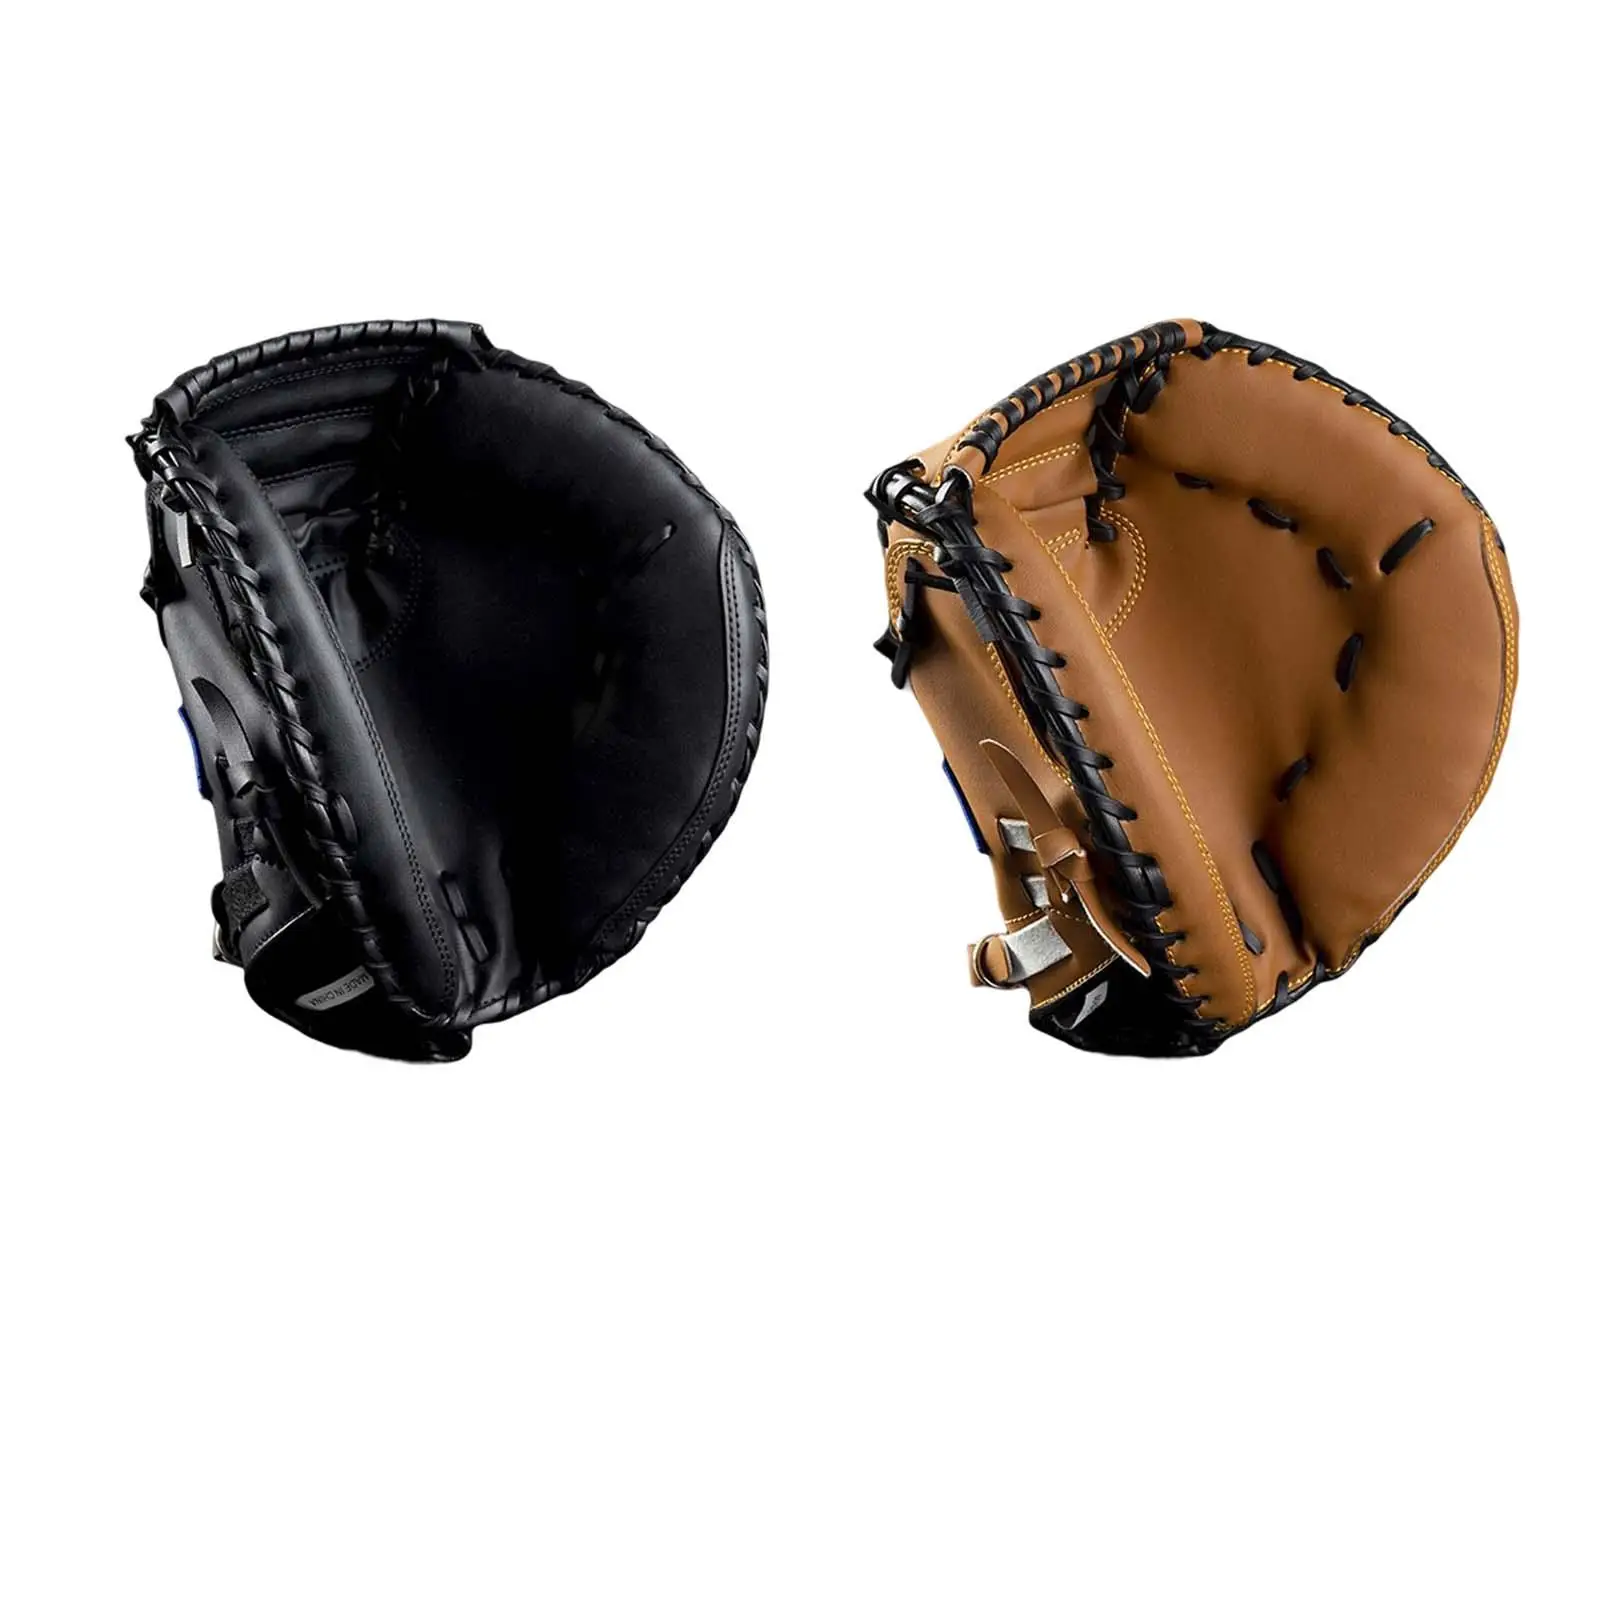 Sports Baseball Glove Durable Baseball and Softball for Outdoor Sports